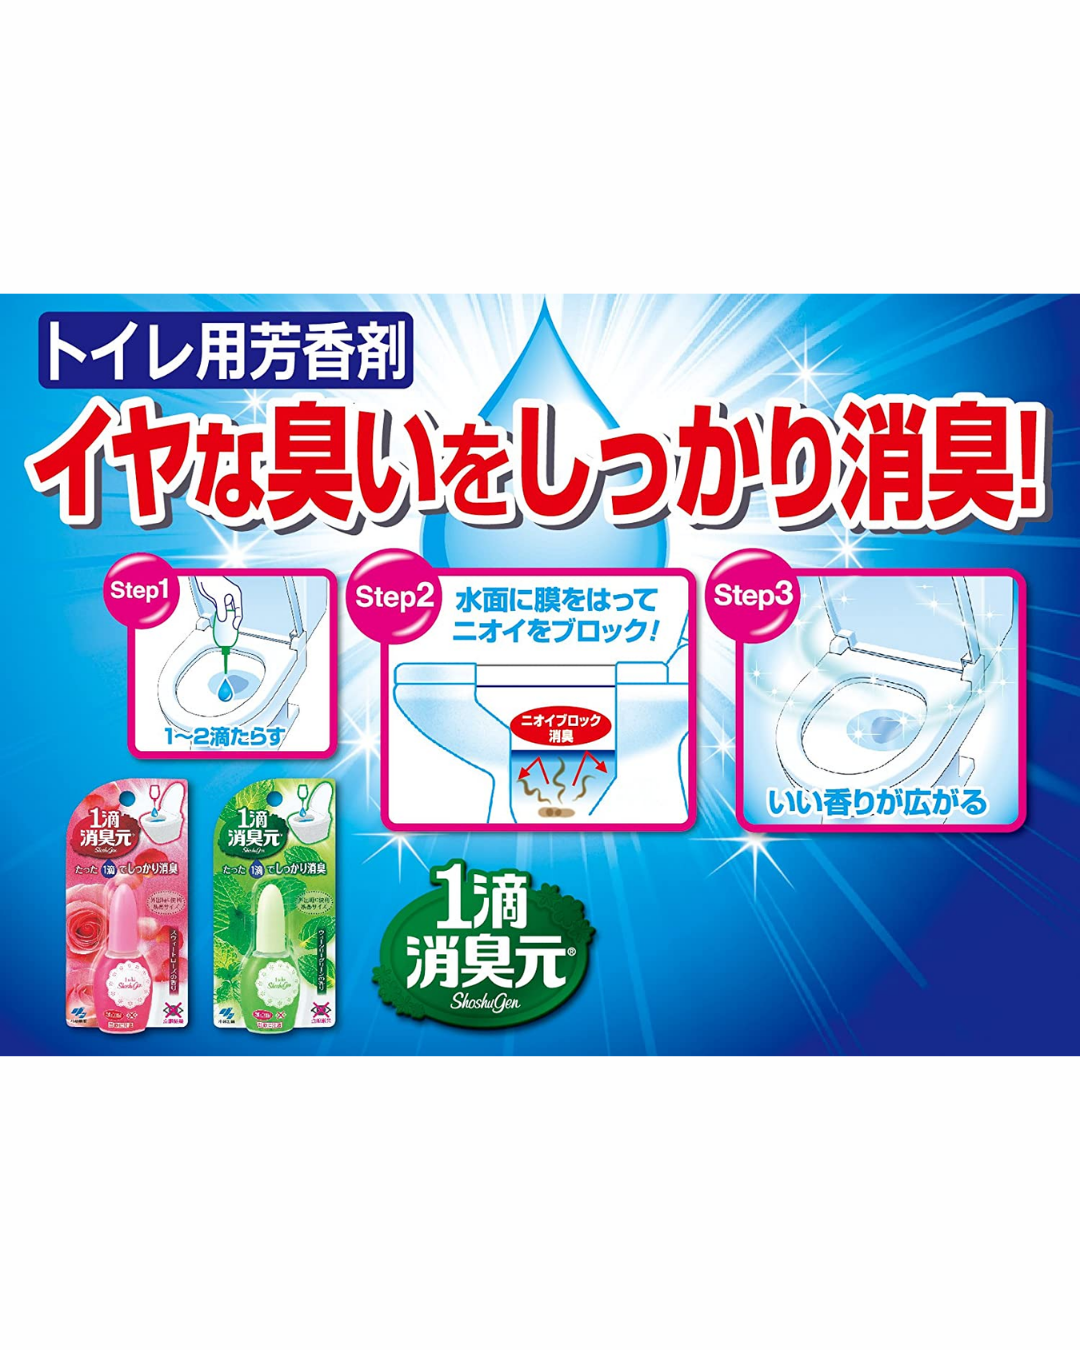 Kobayashi 1 Drop Bathroom Deodorizer